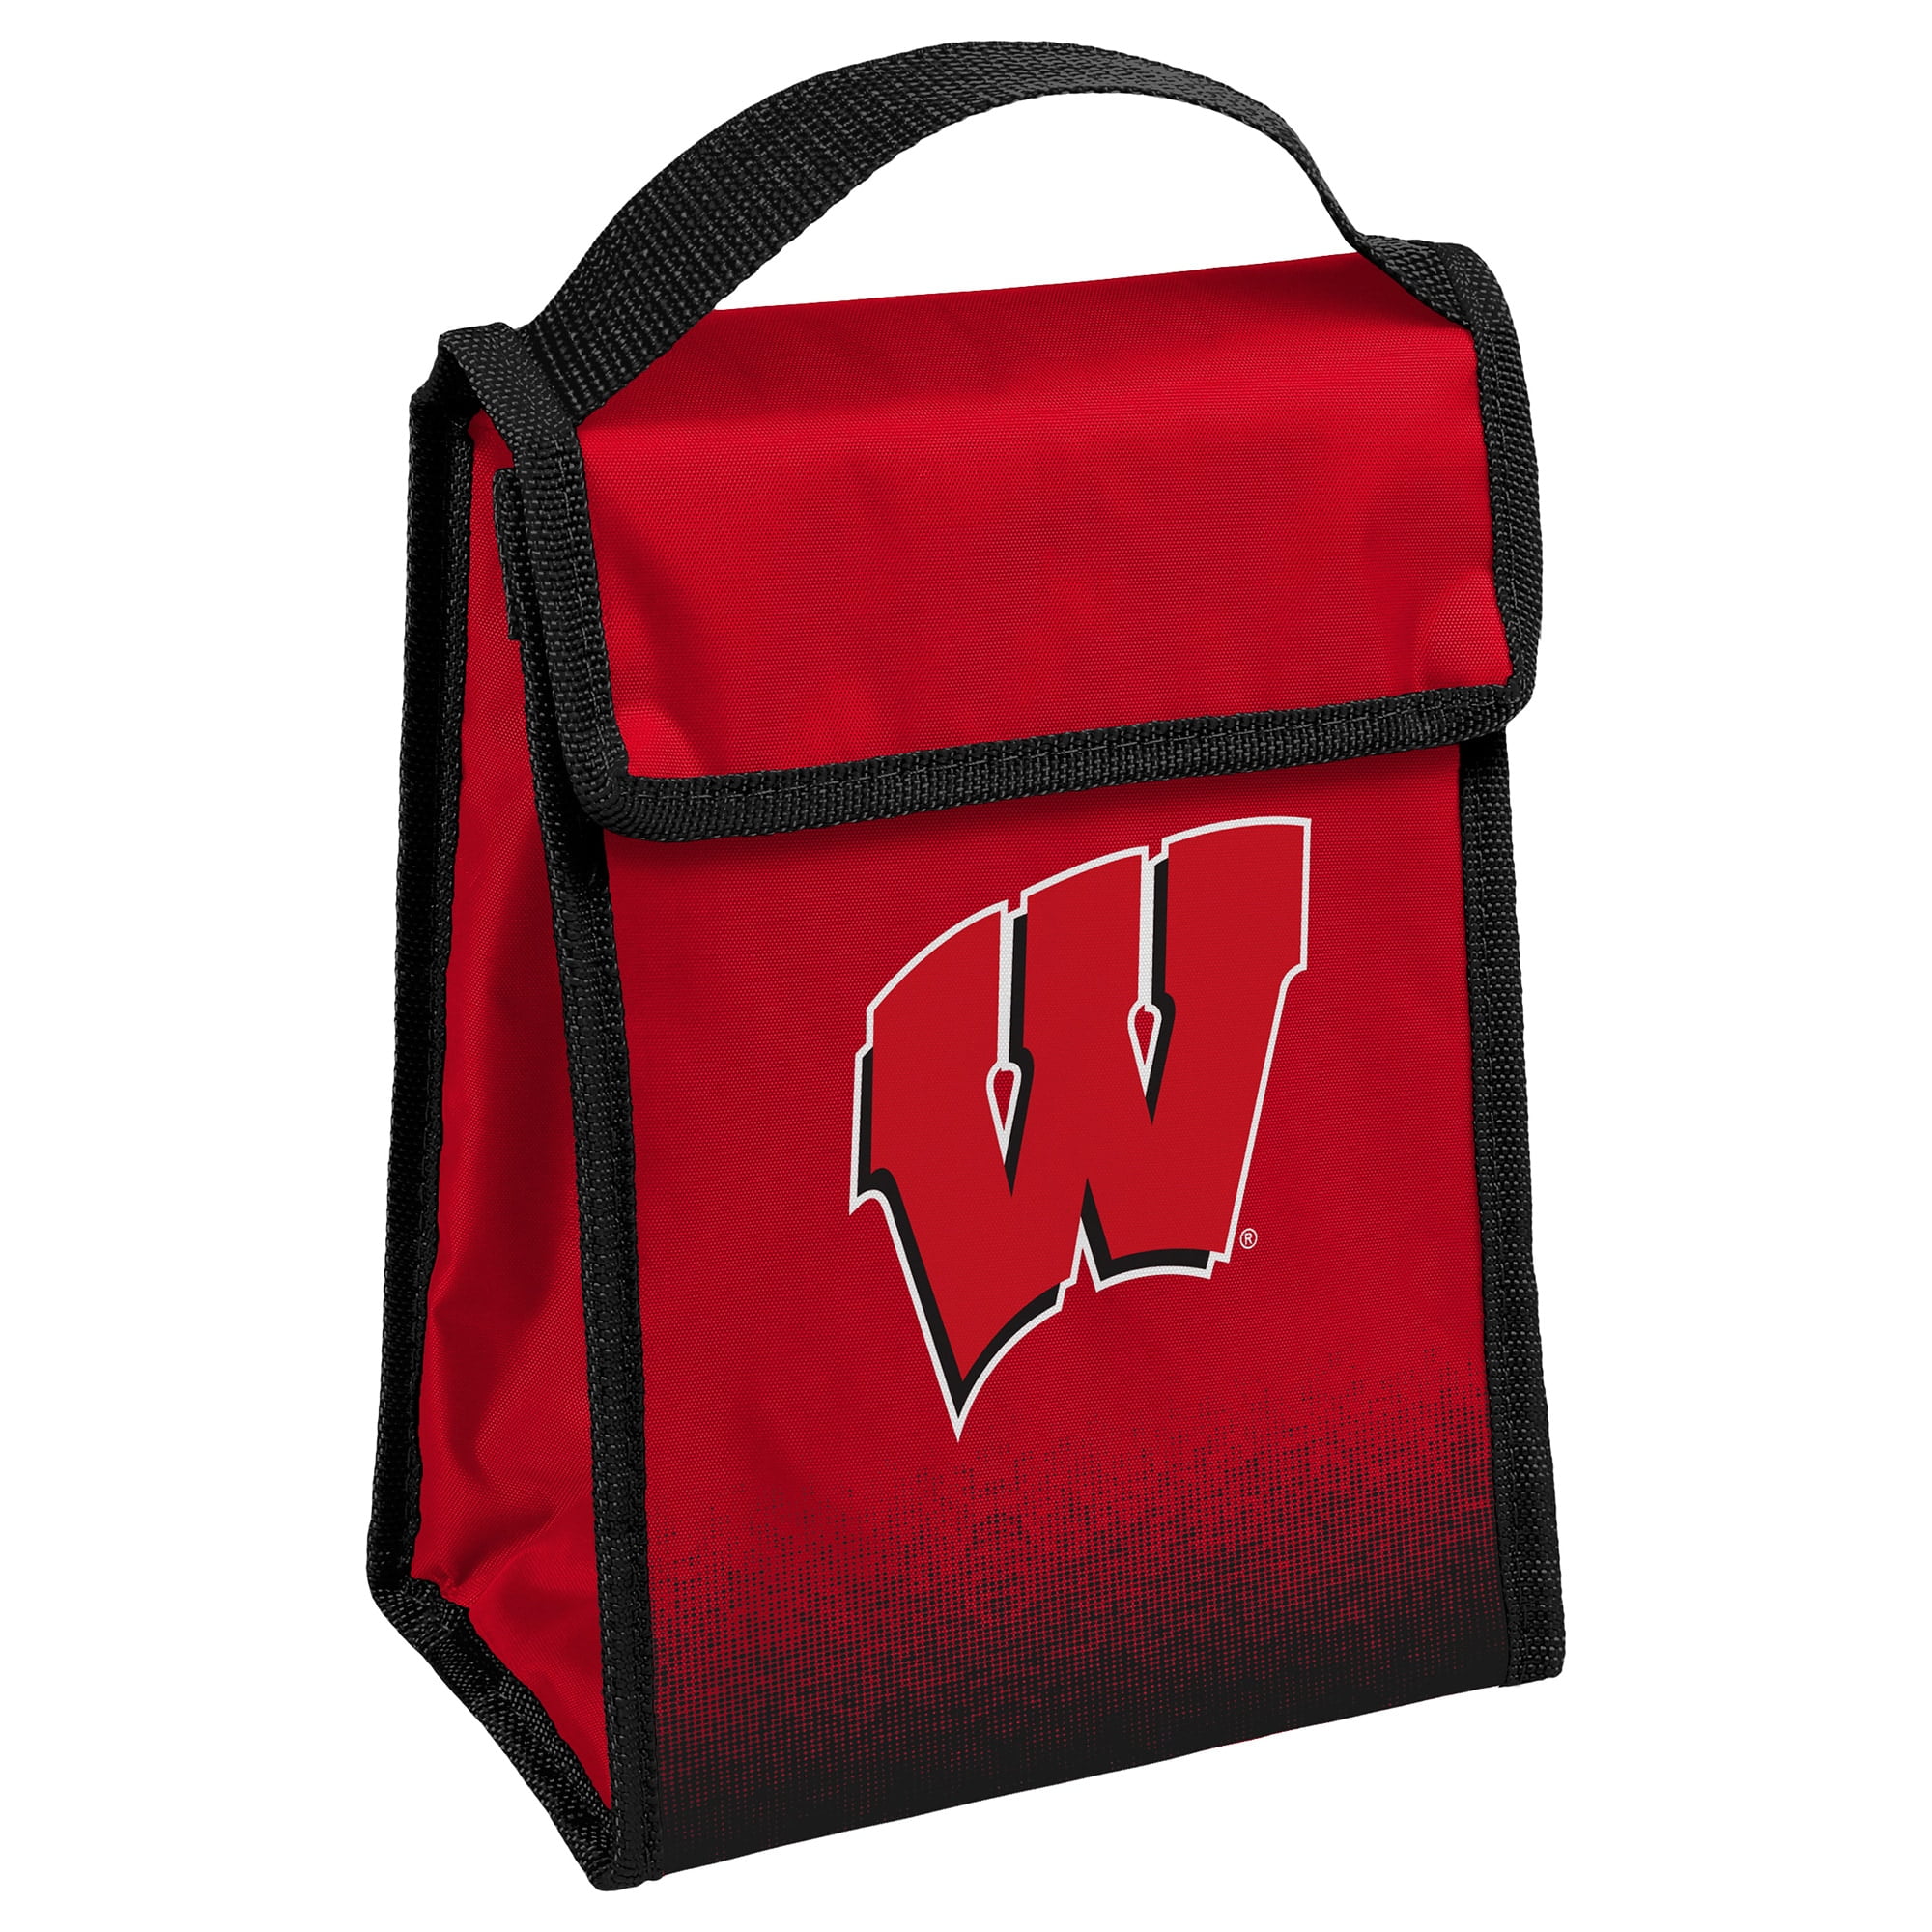 FOCO NCAA Unisex-Adult Gradient Lunch Bag 